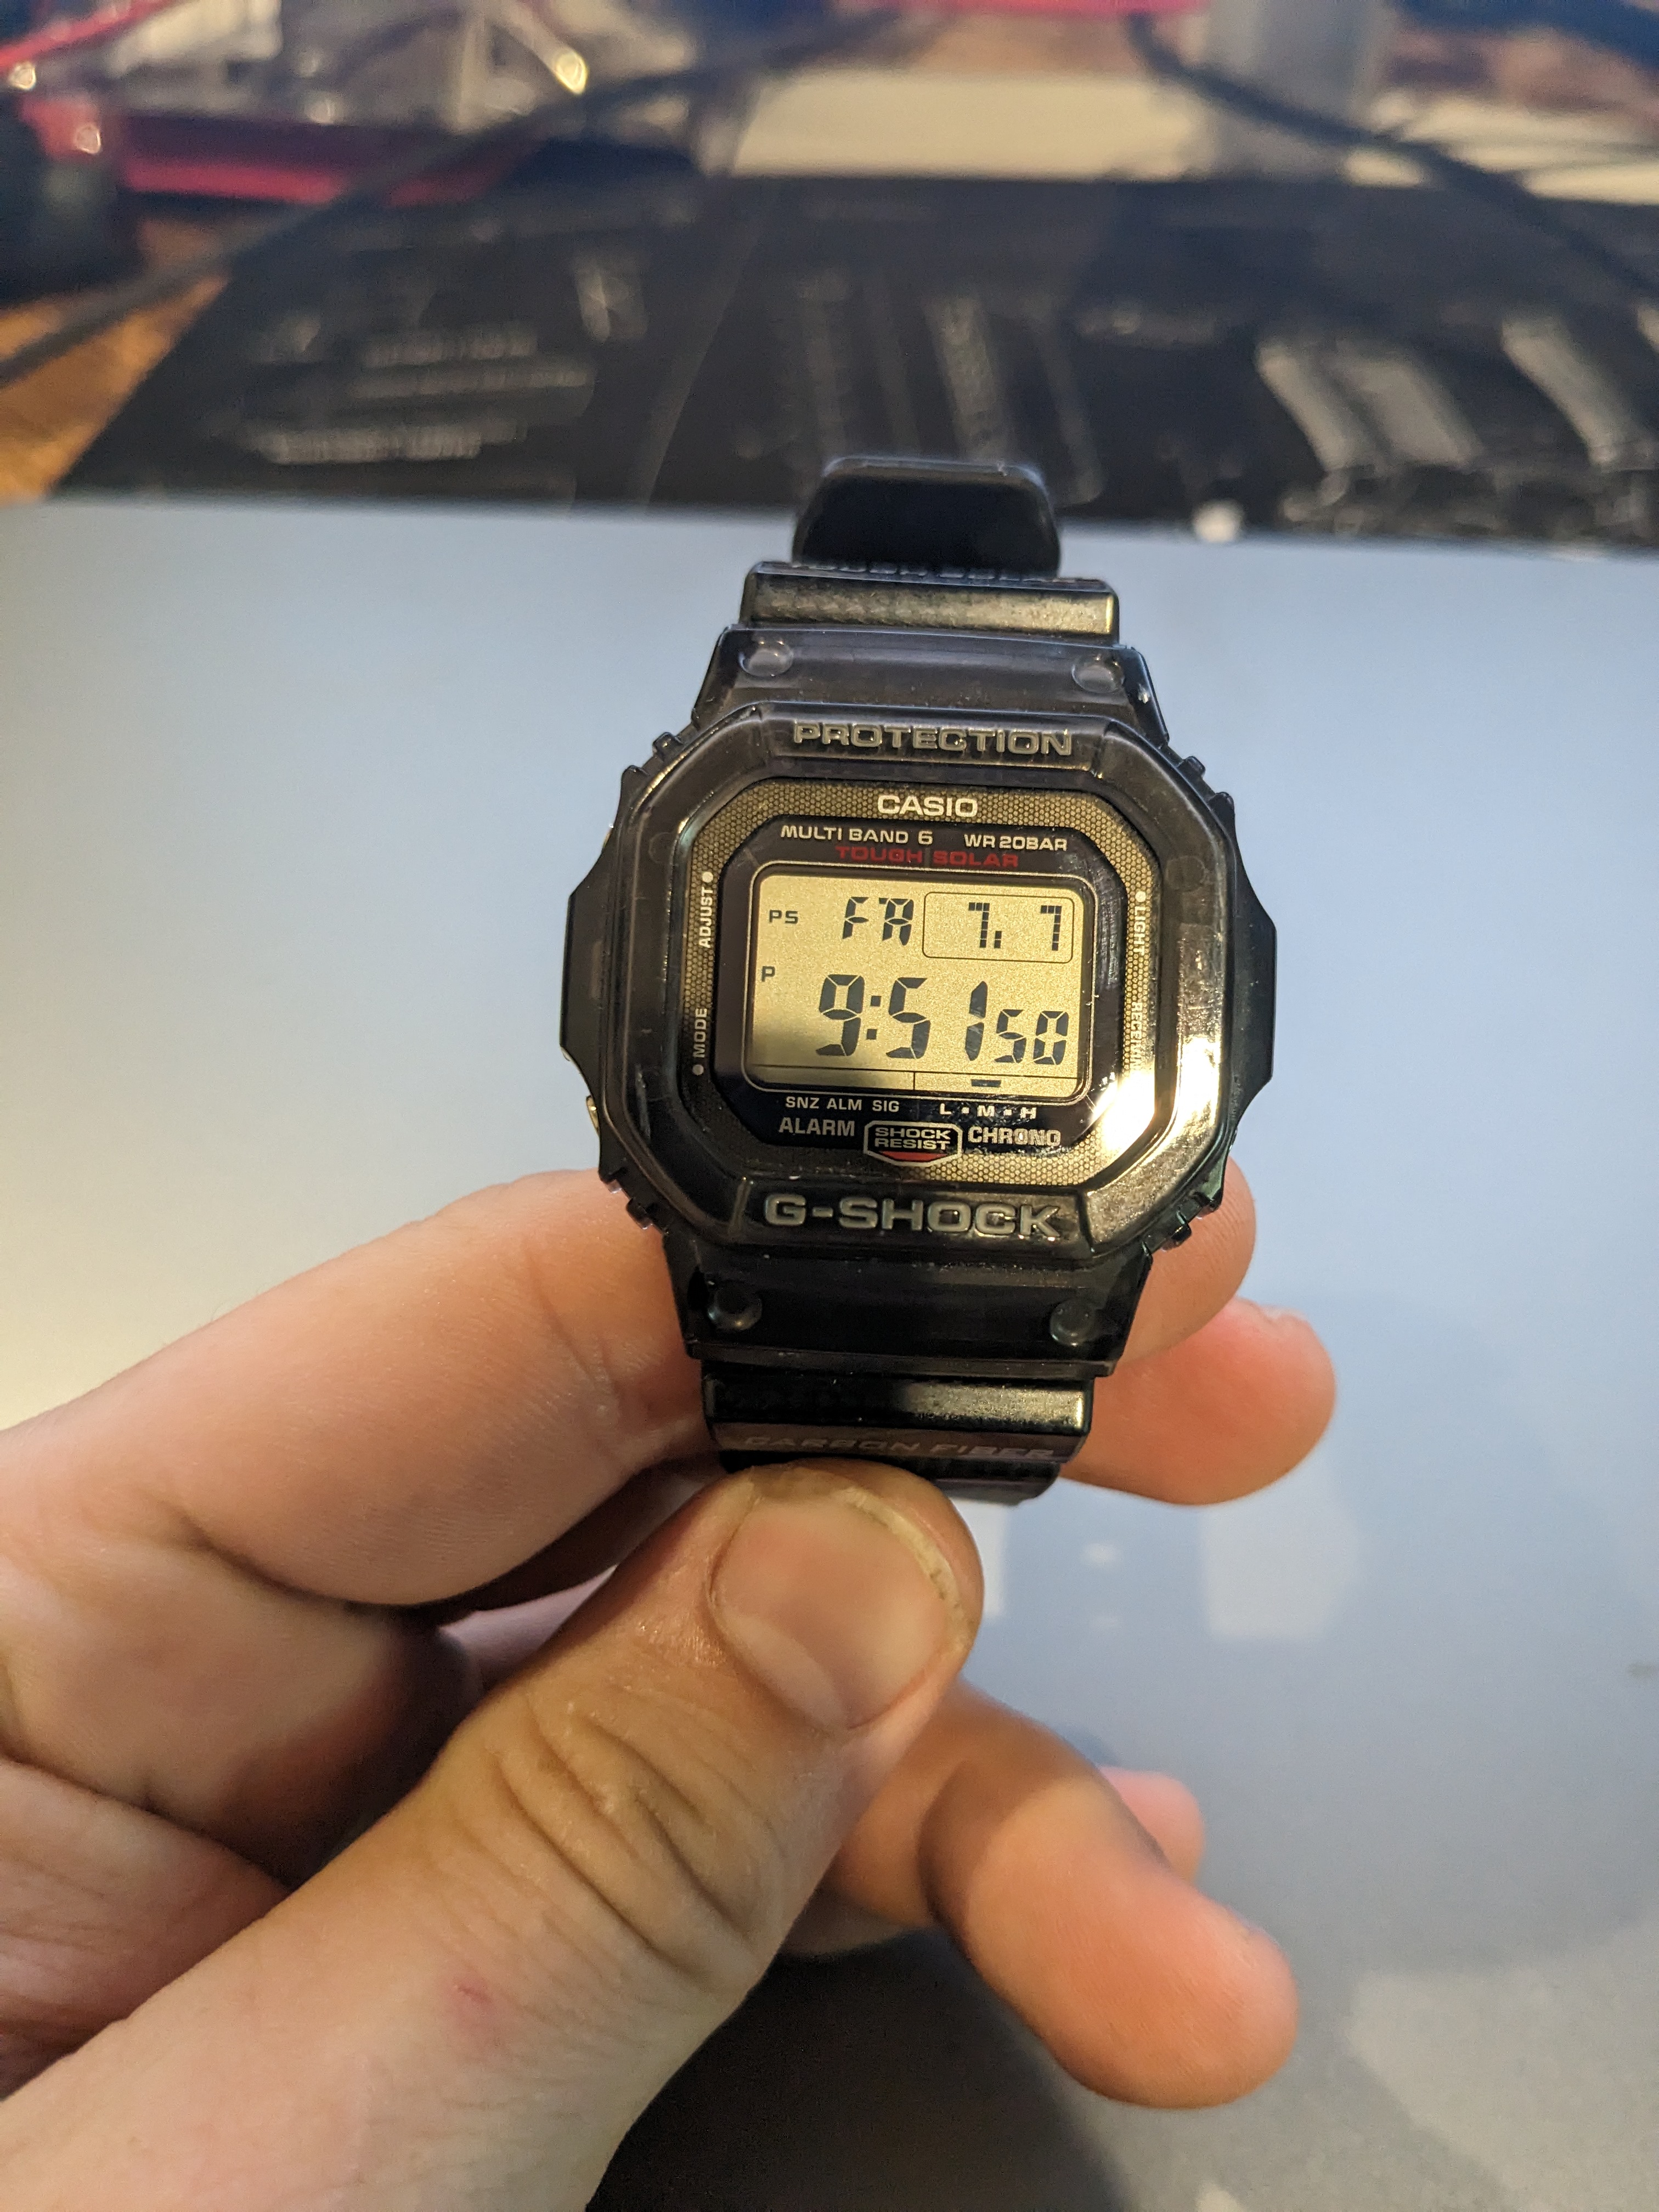 WTS] G-Shock GW-S5600-1 | WatchCharts Marketplace